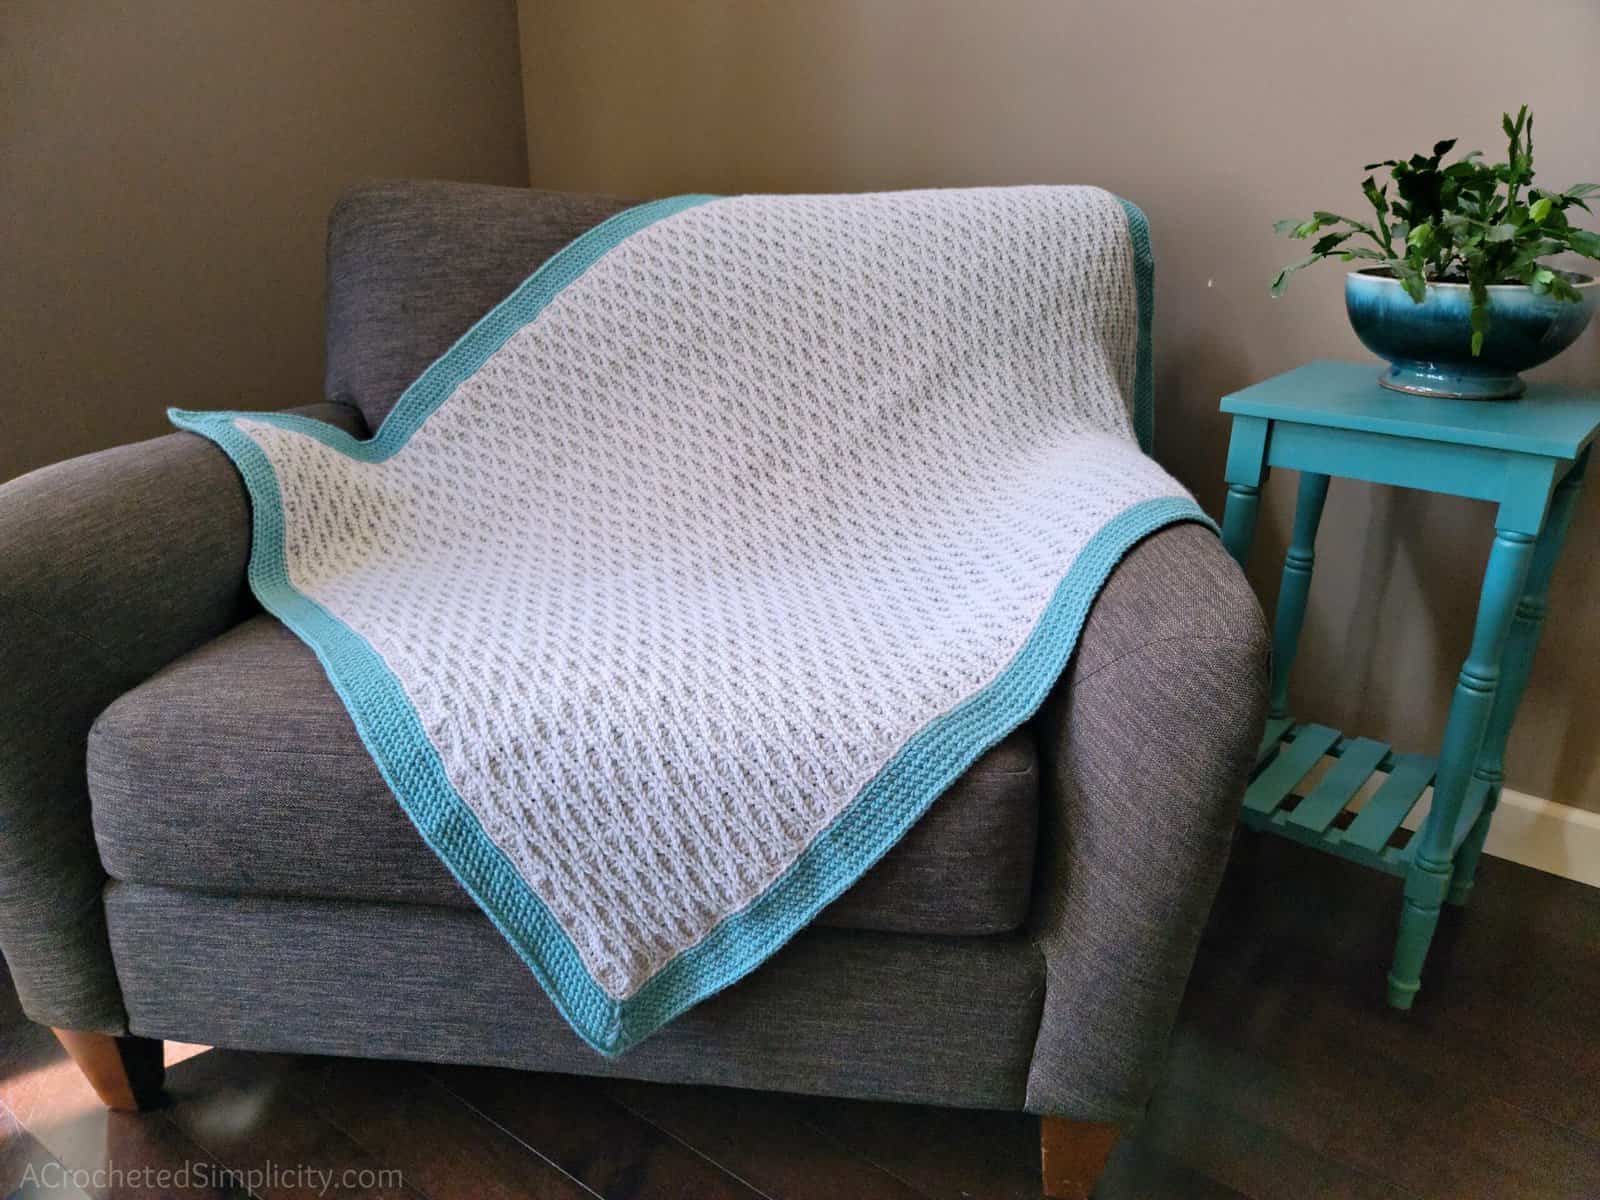 Free Crochet Blanket Pattern - Triple Textures Afghan by A Crocheted Simplicity #freecrochetblanketpattern #freecrochetafghanpattern #texturedcrochet crochetblanket